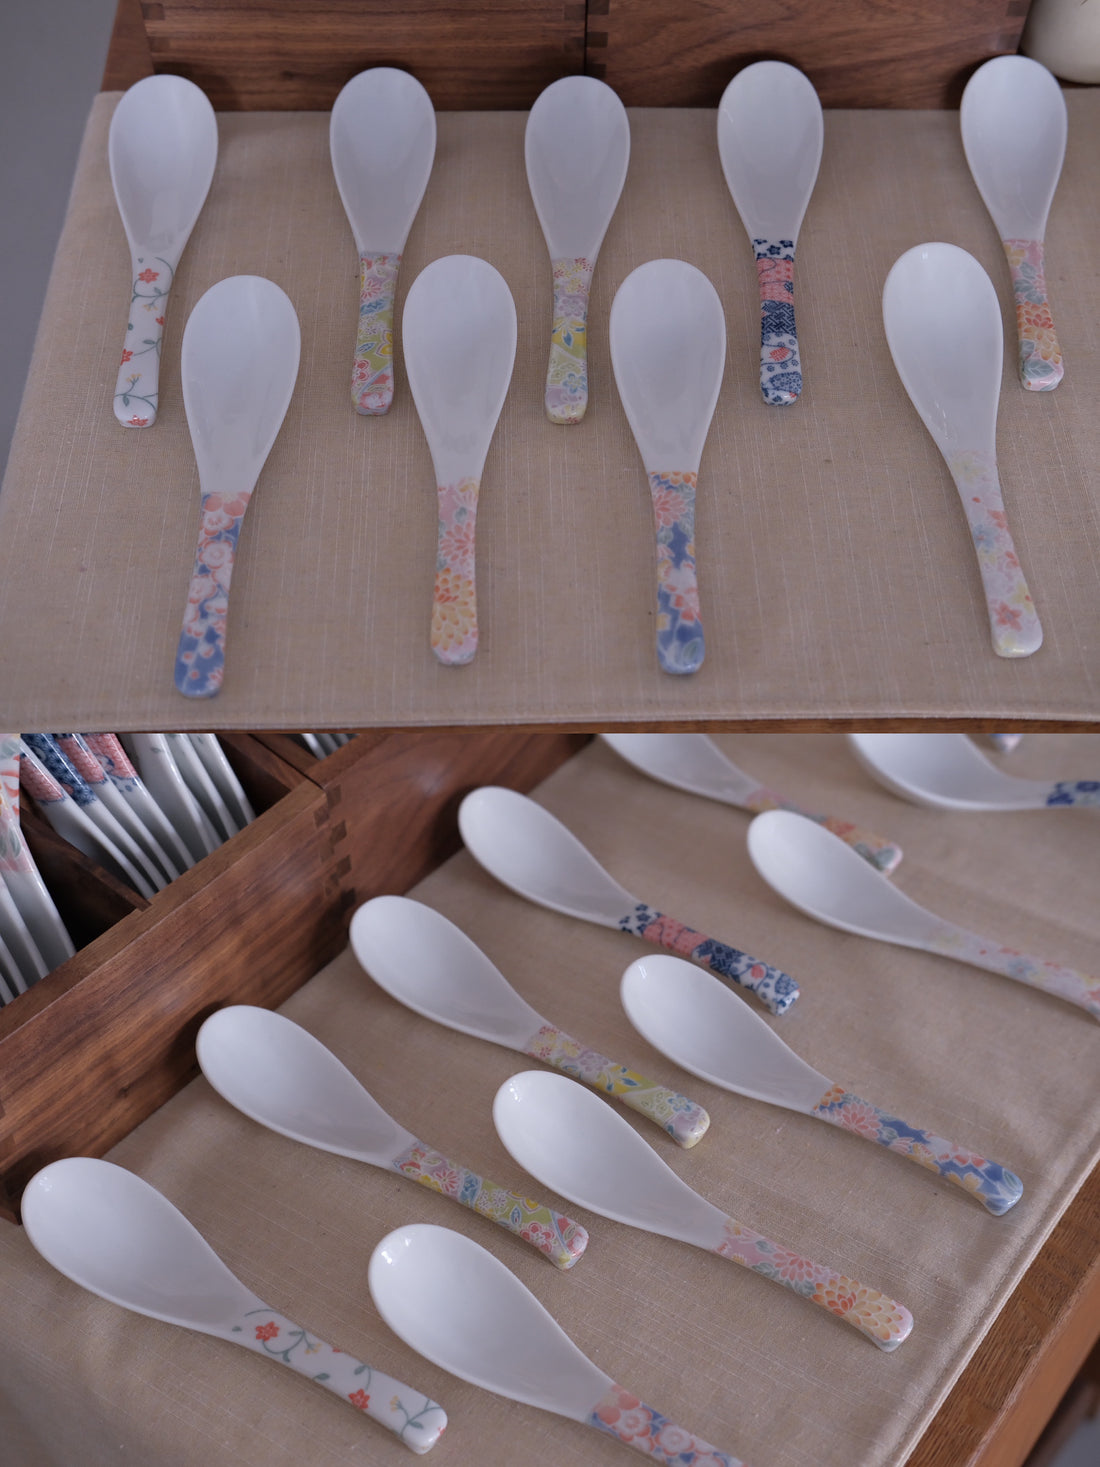 Japan Made Ceramic Spoon